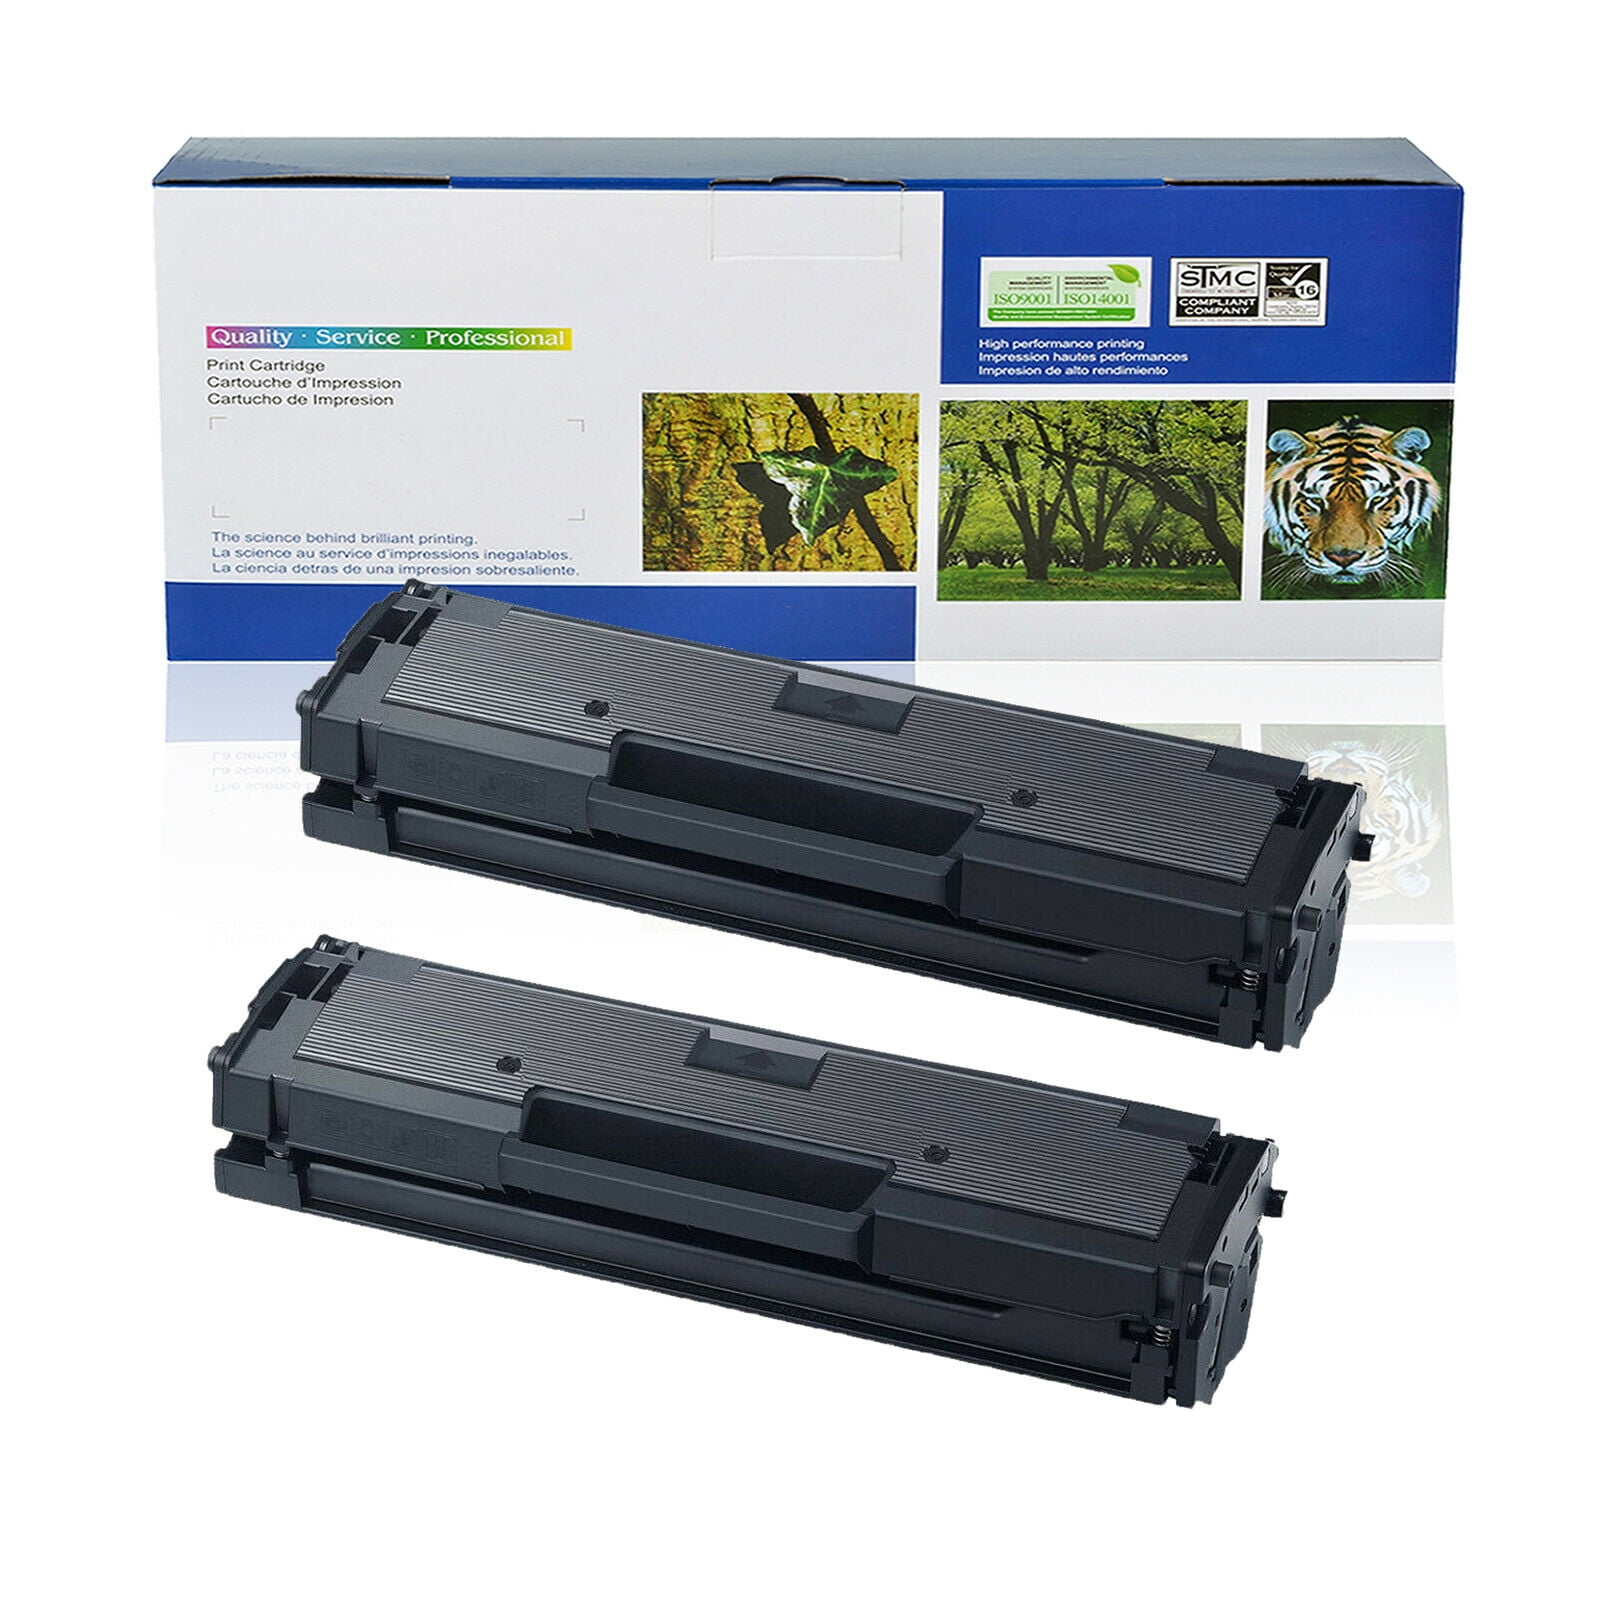 4 Pack Premium MLT-D111S Toner Cartridges for Samsung Xpress M2022W M2022 M2070W